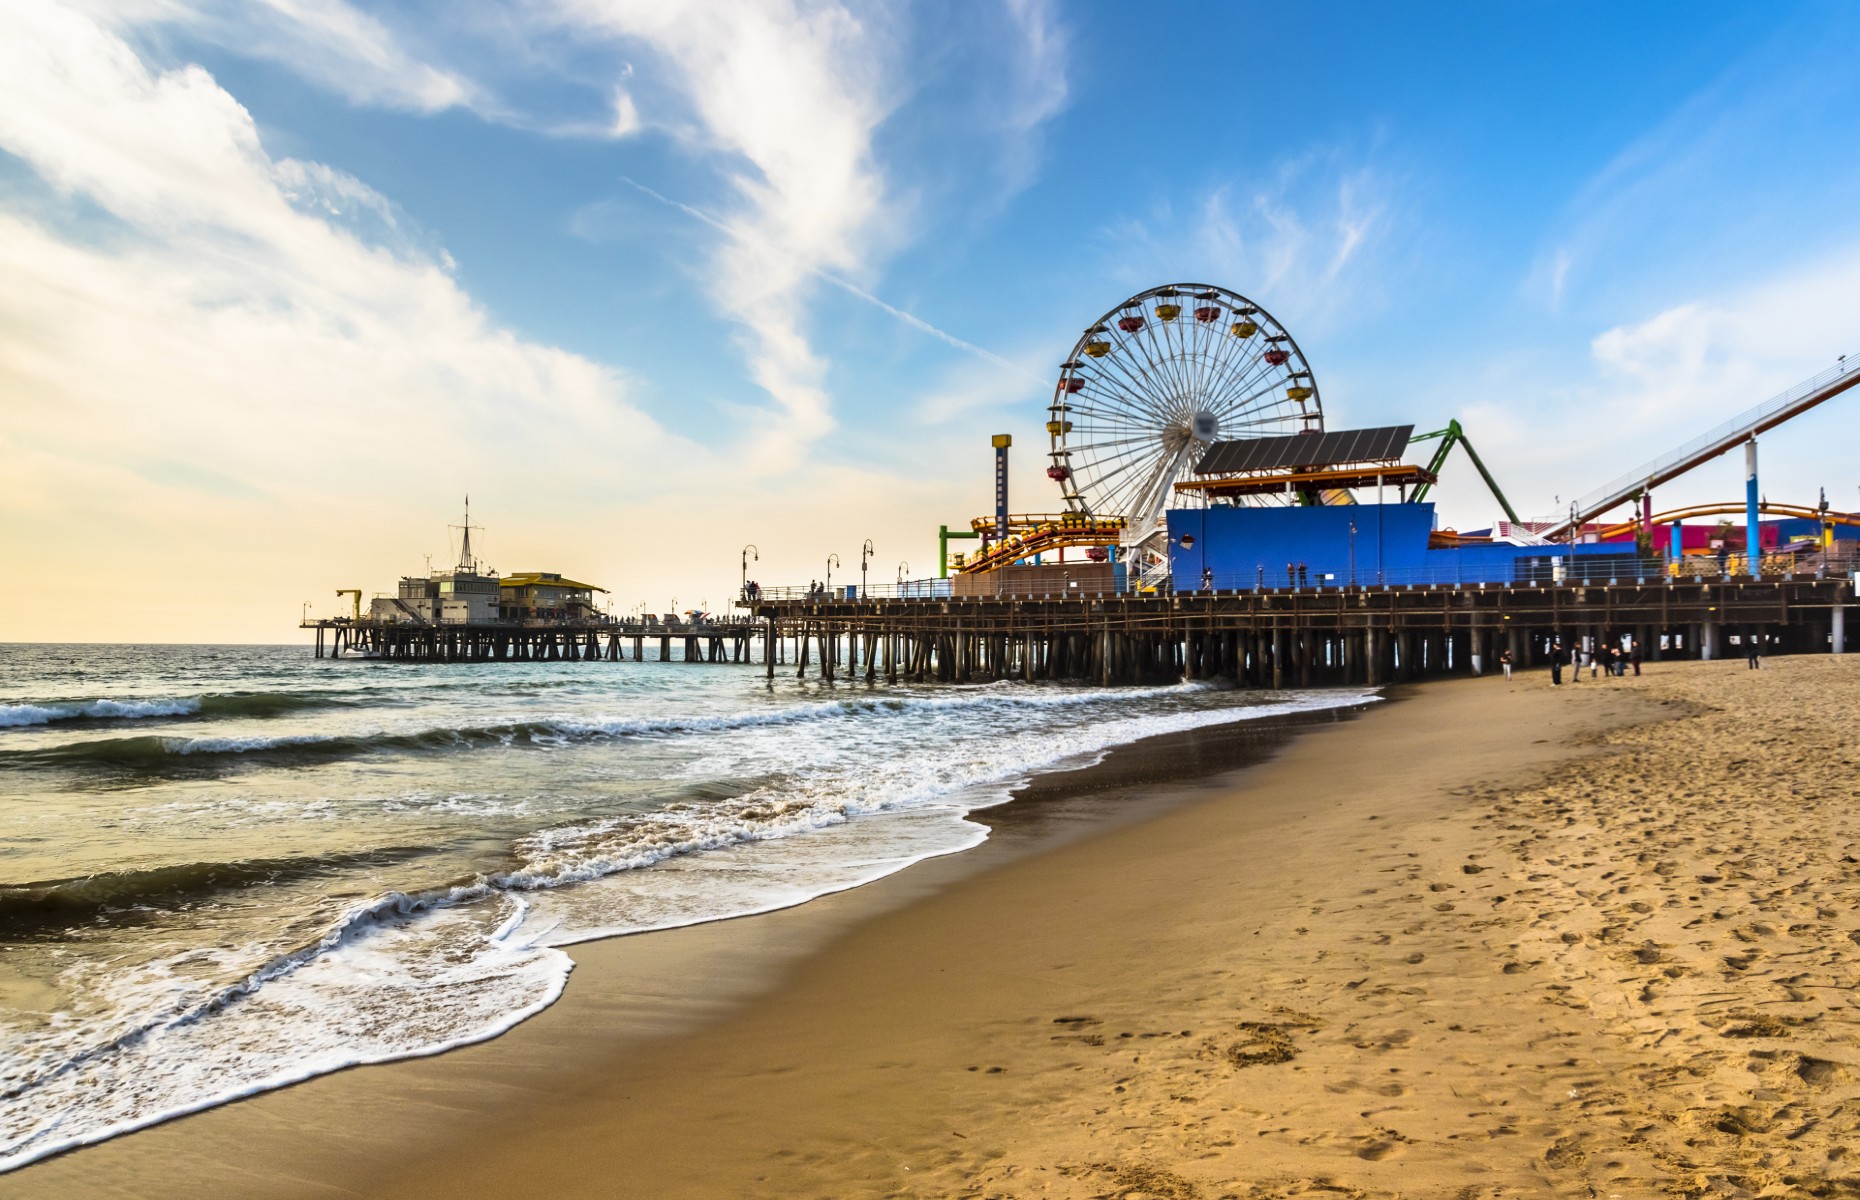 Santa Monica Pier (Image: ProDesign studio/Shutterstock)